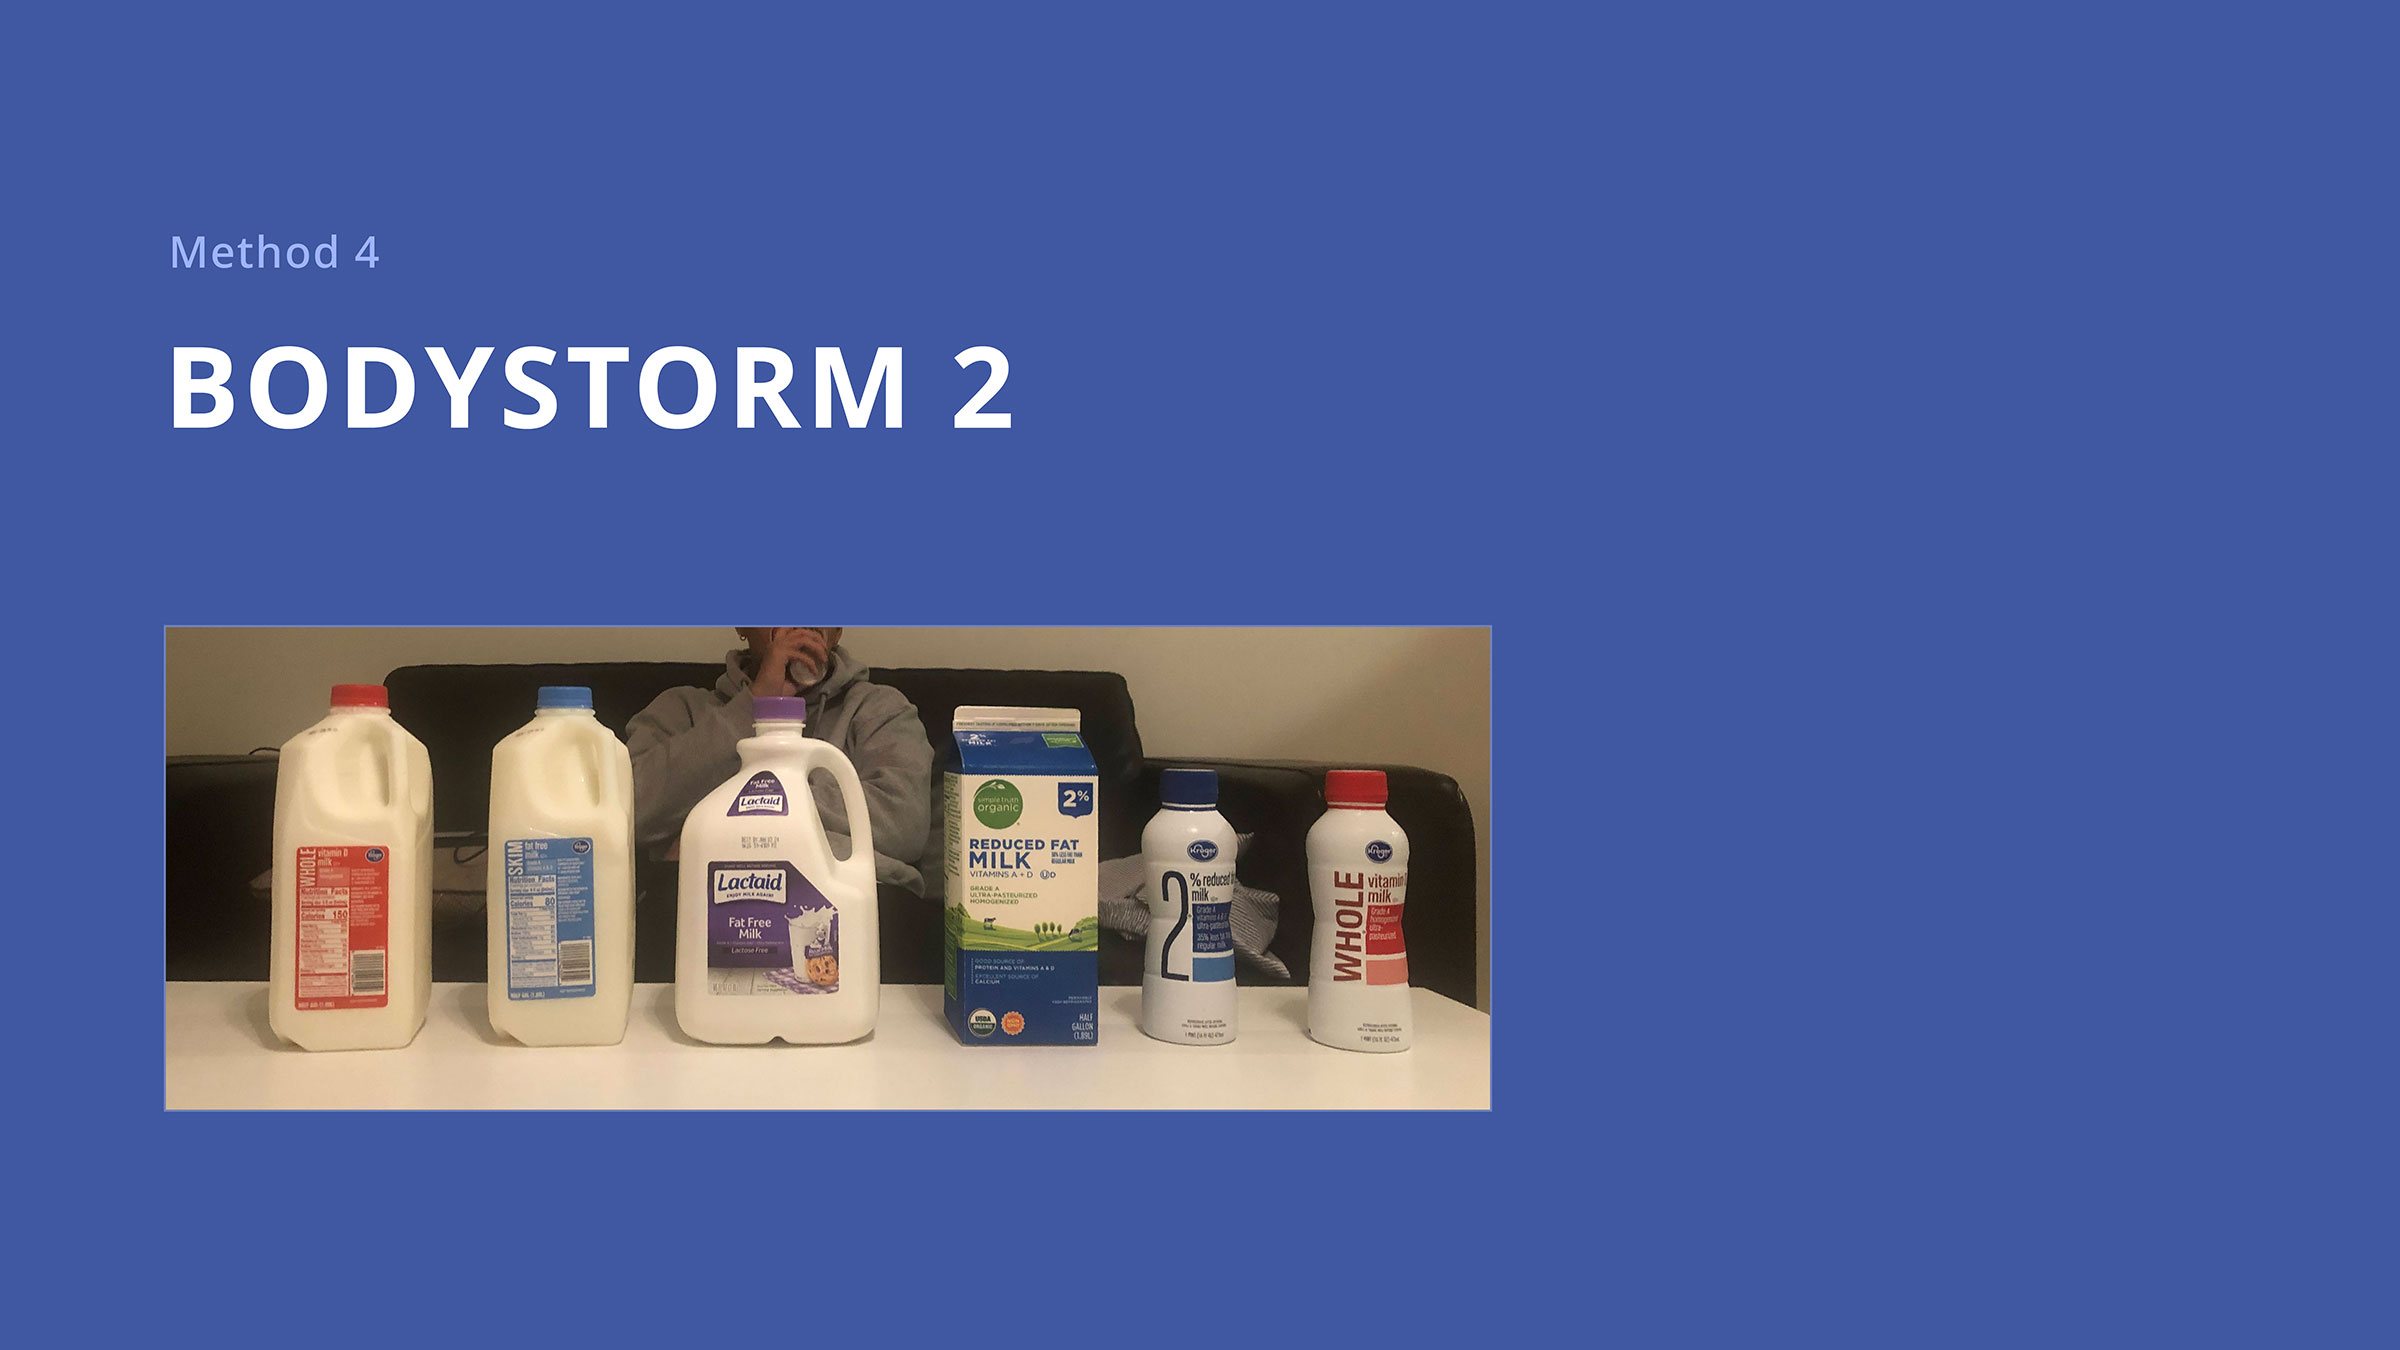 Method 4: Bodystorm 2. An array of different milk cartons is shown.